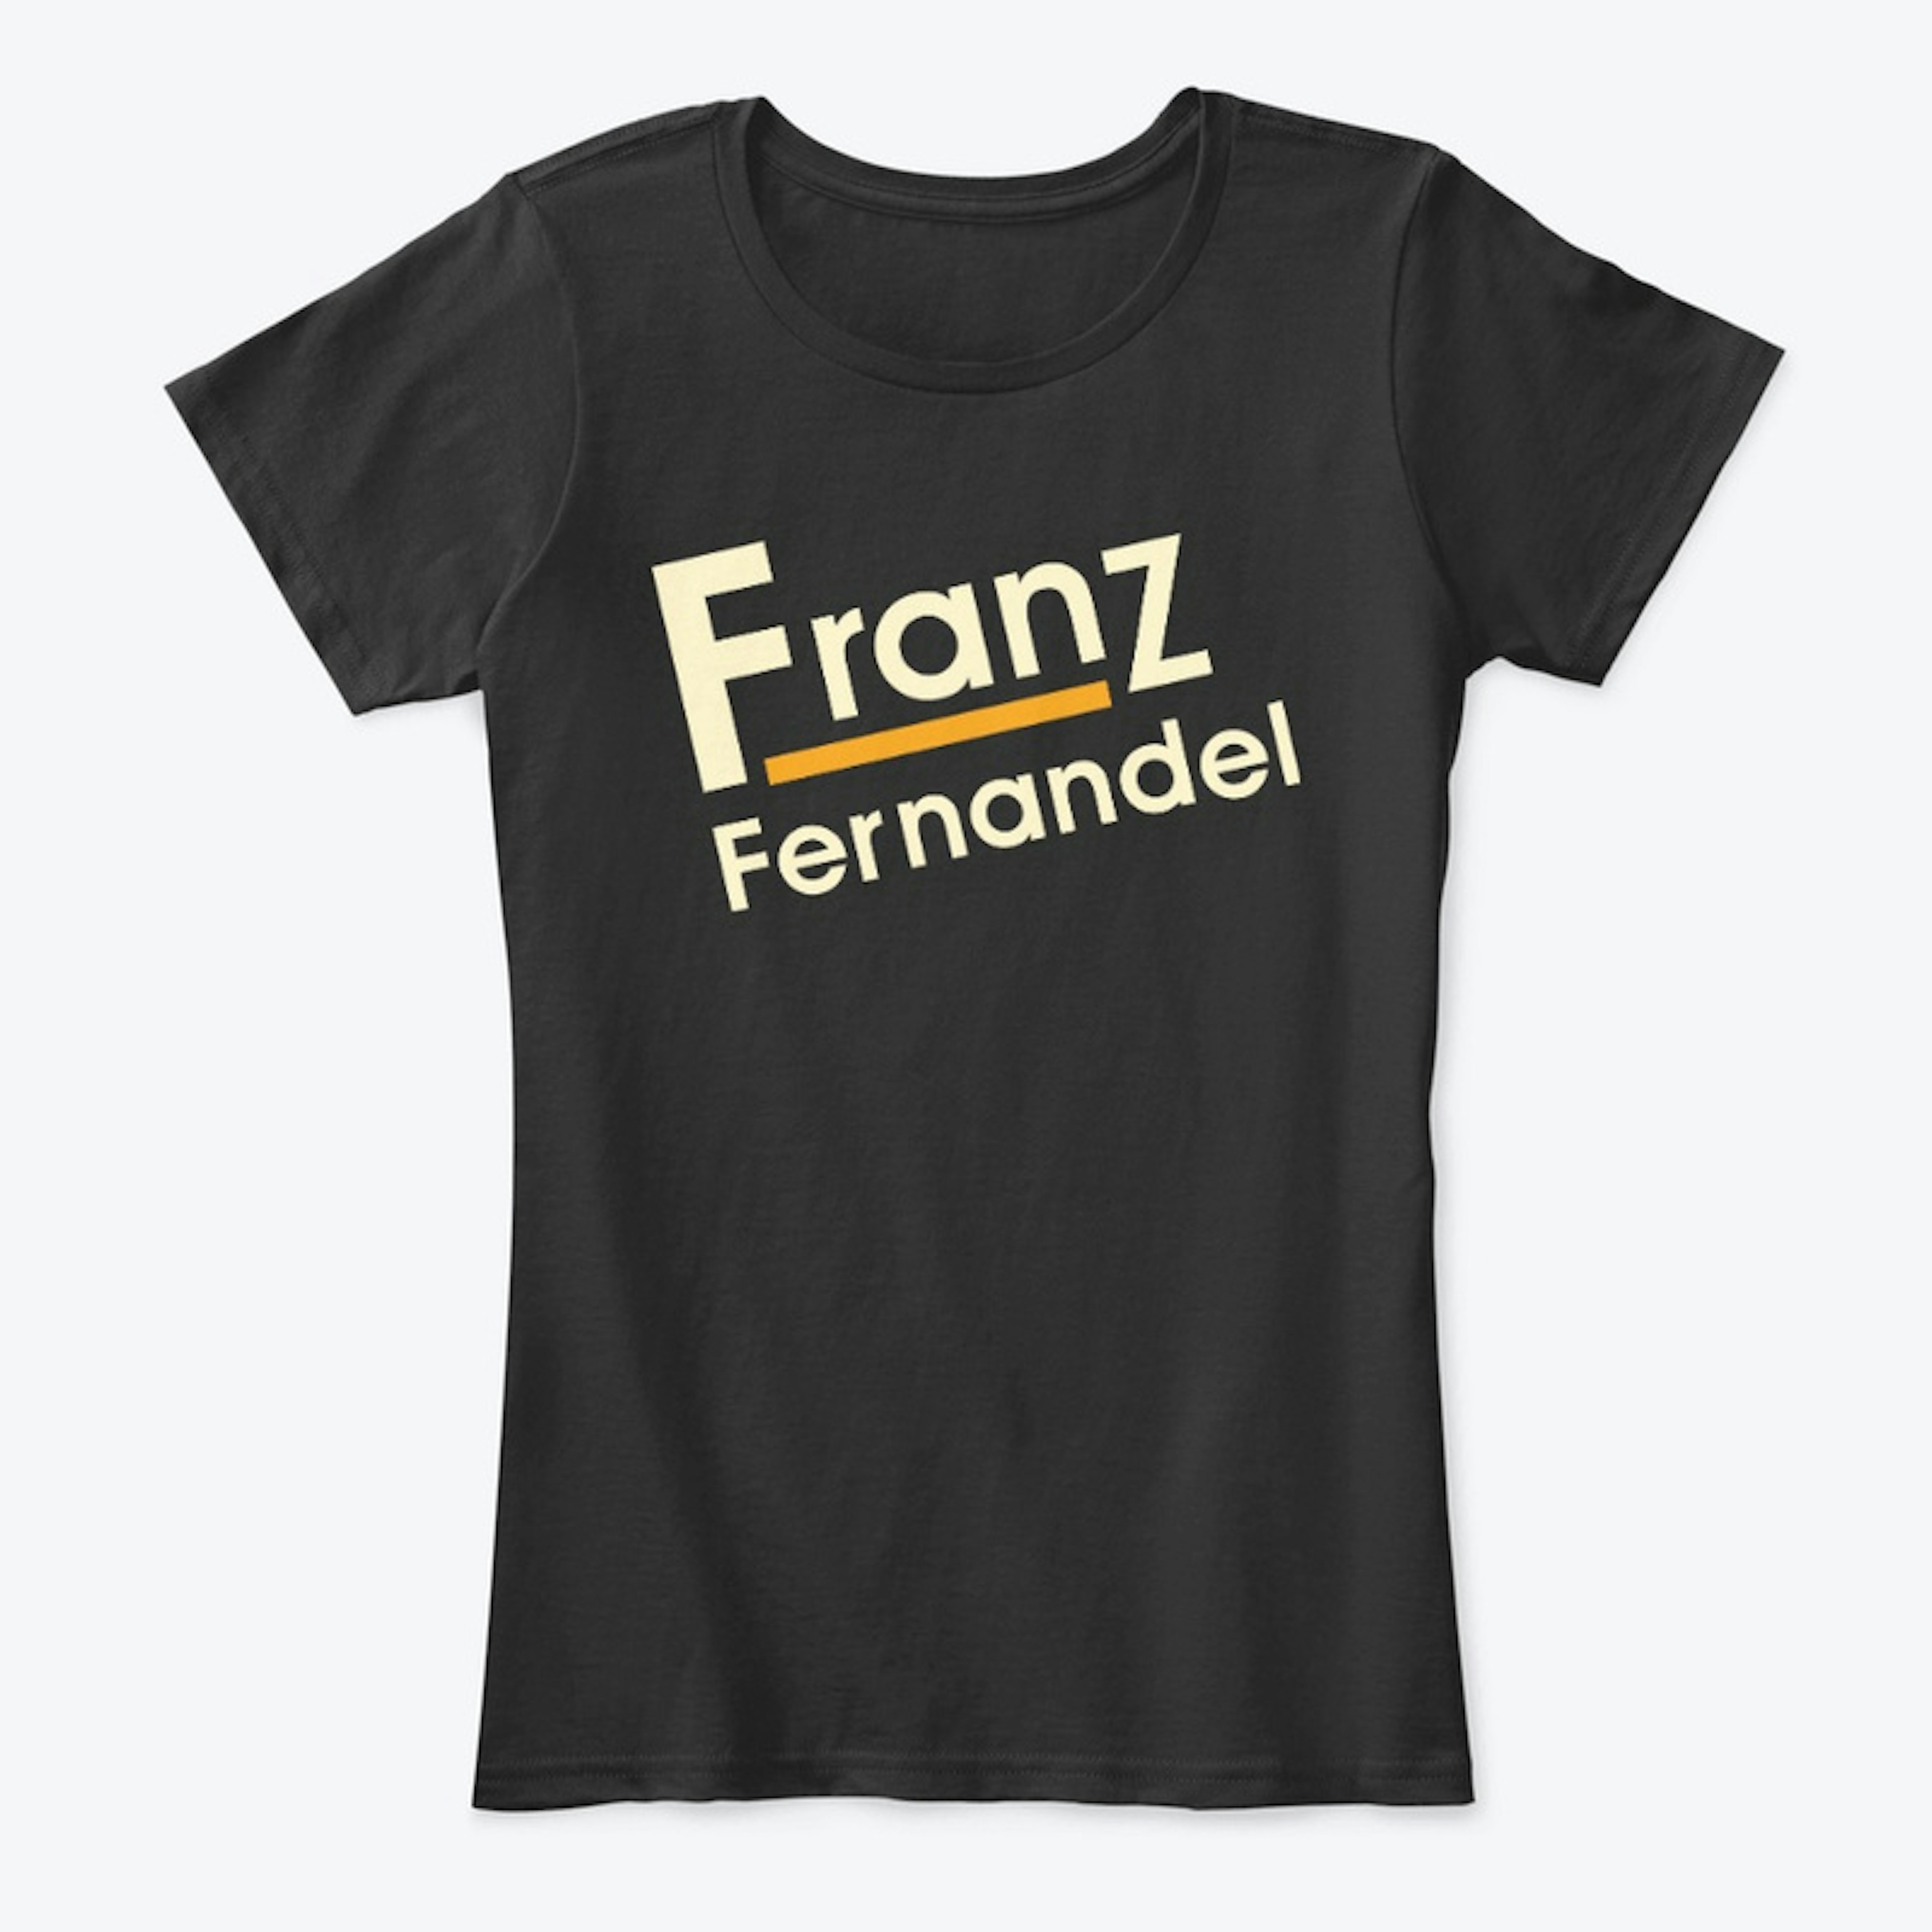 Franz Fernandel